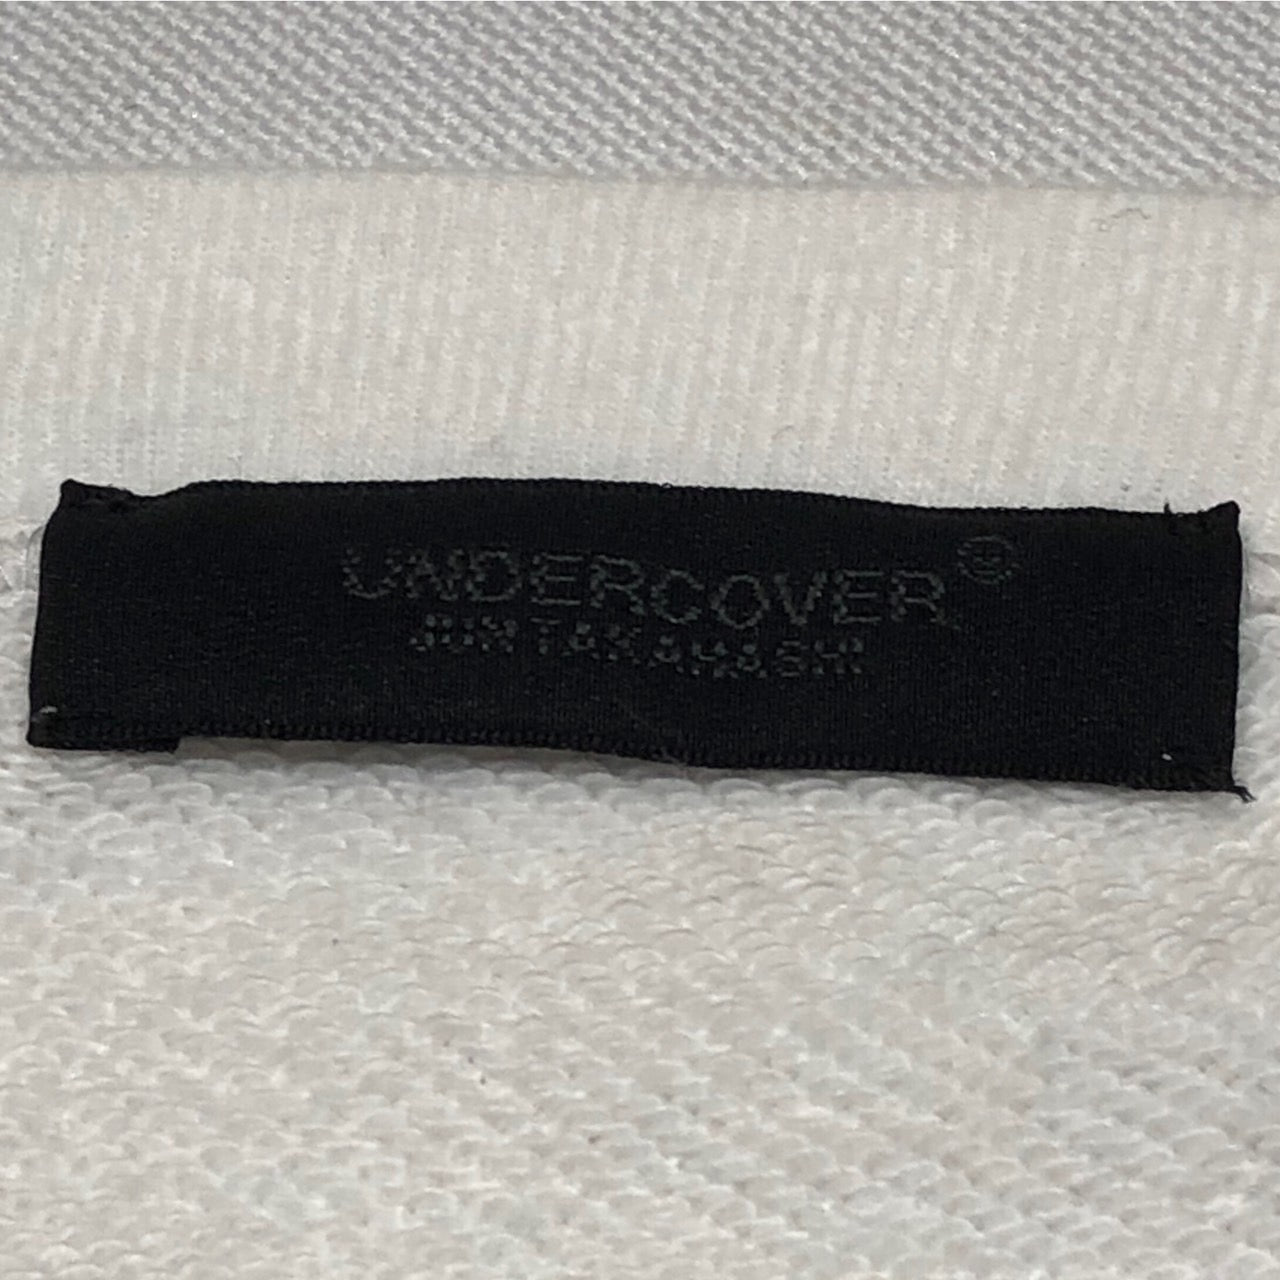 UNDERCOVER(アンダーカバー) sweat undercover toy/熊プリントスウェット UCY4891-2 5(XLサイズ程度) ホワイト×レッド